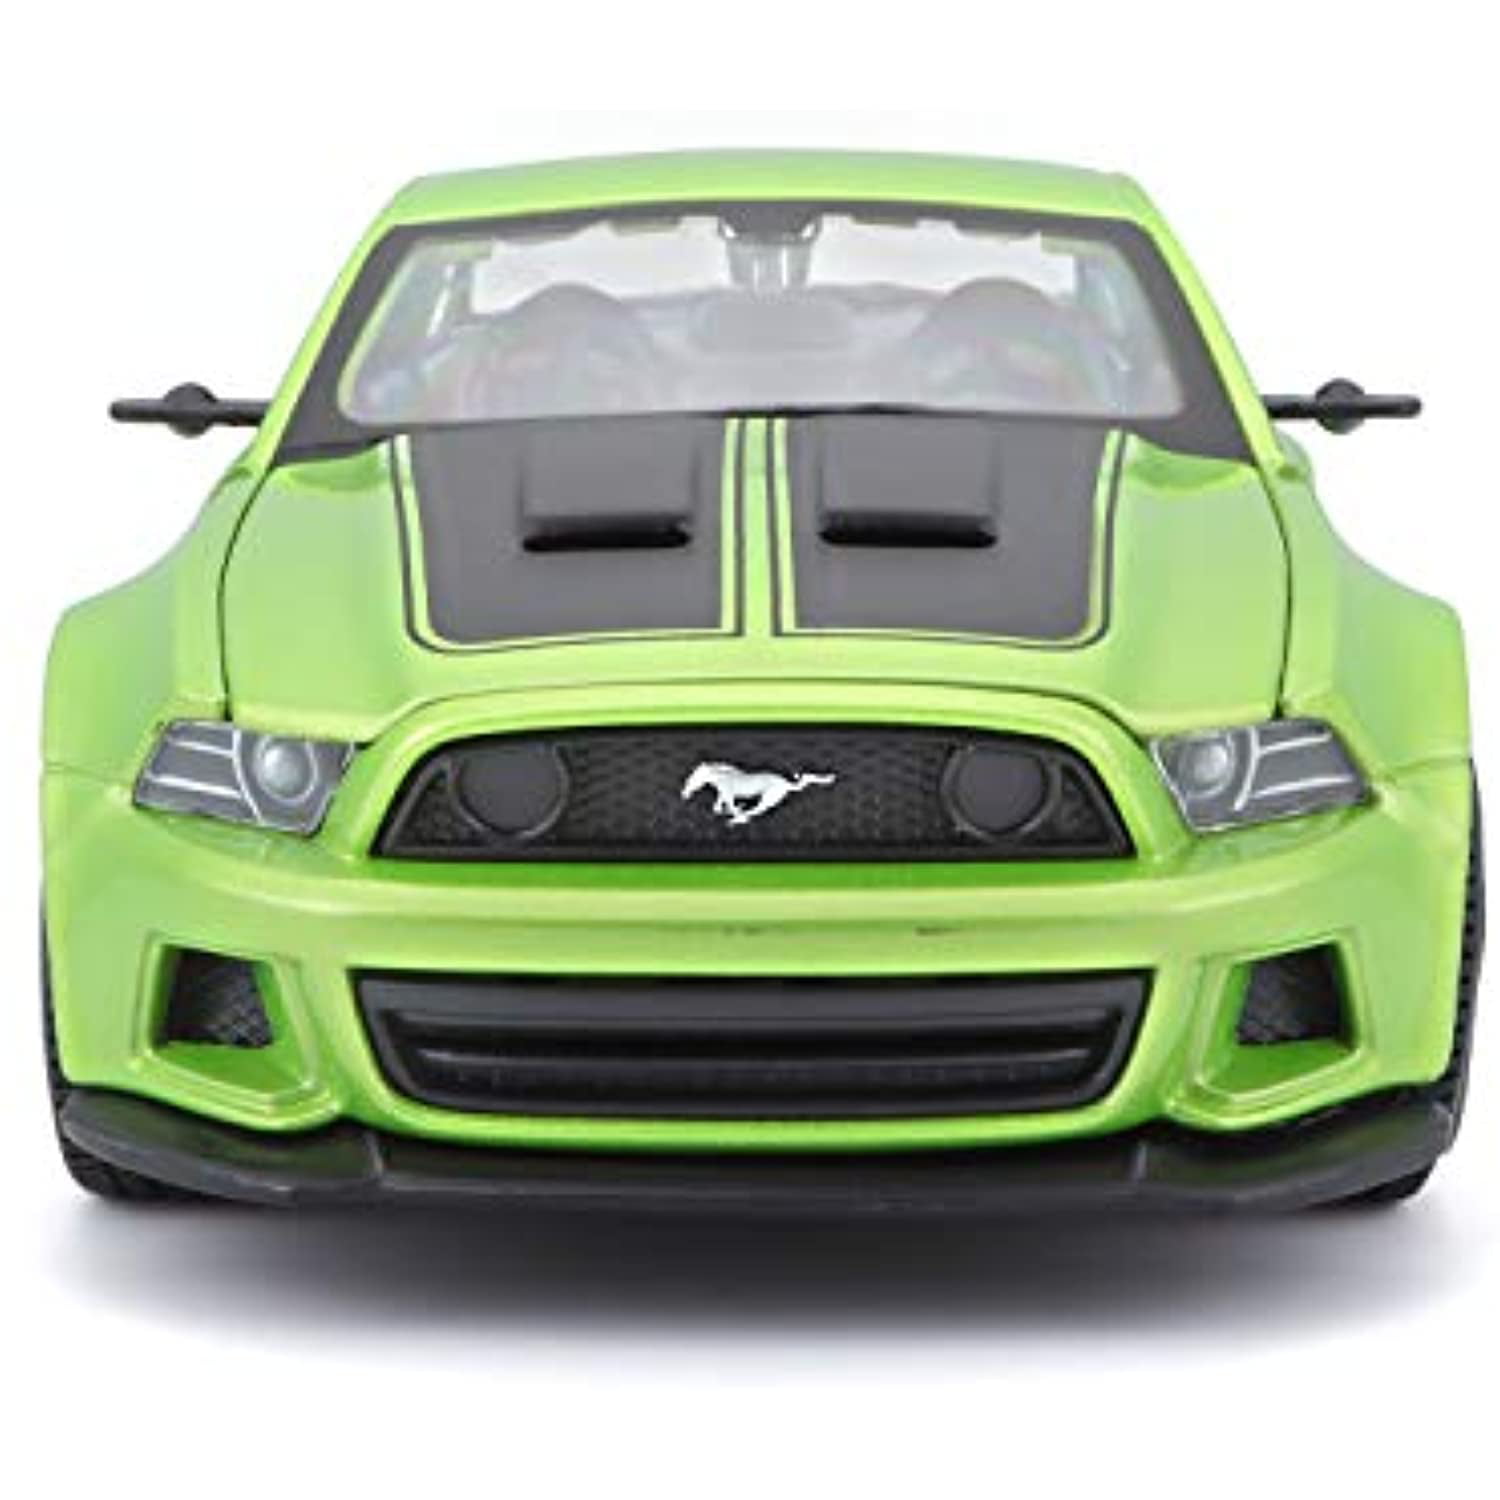 Véhicule miniature - MAISTO - Mustang Street Racer - 2014